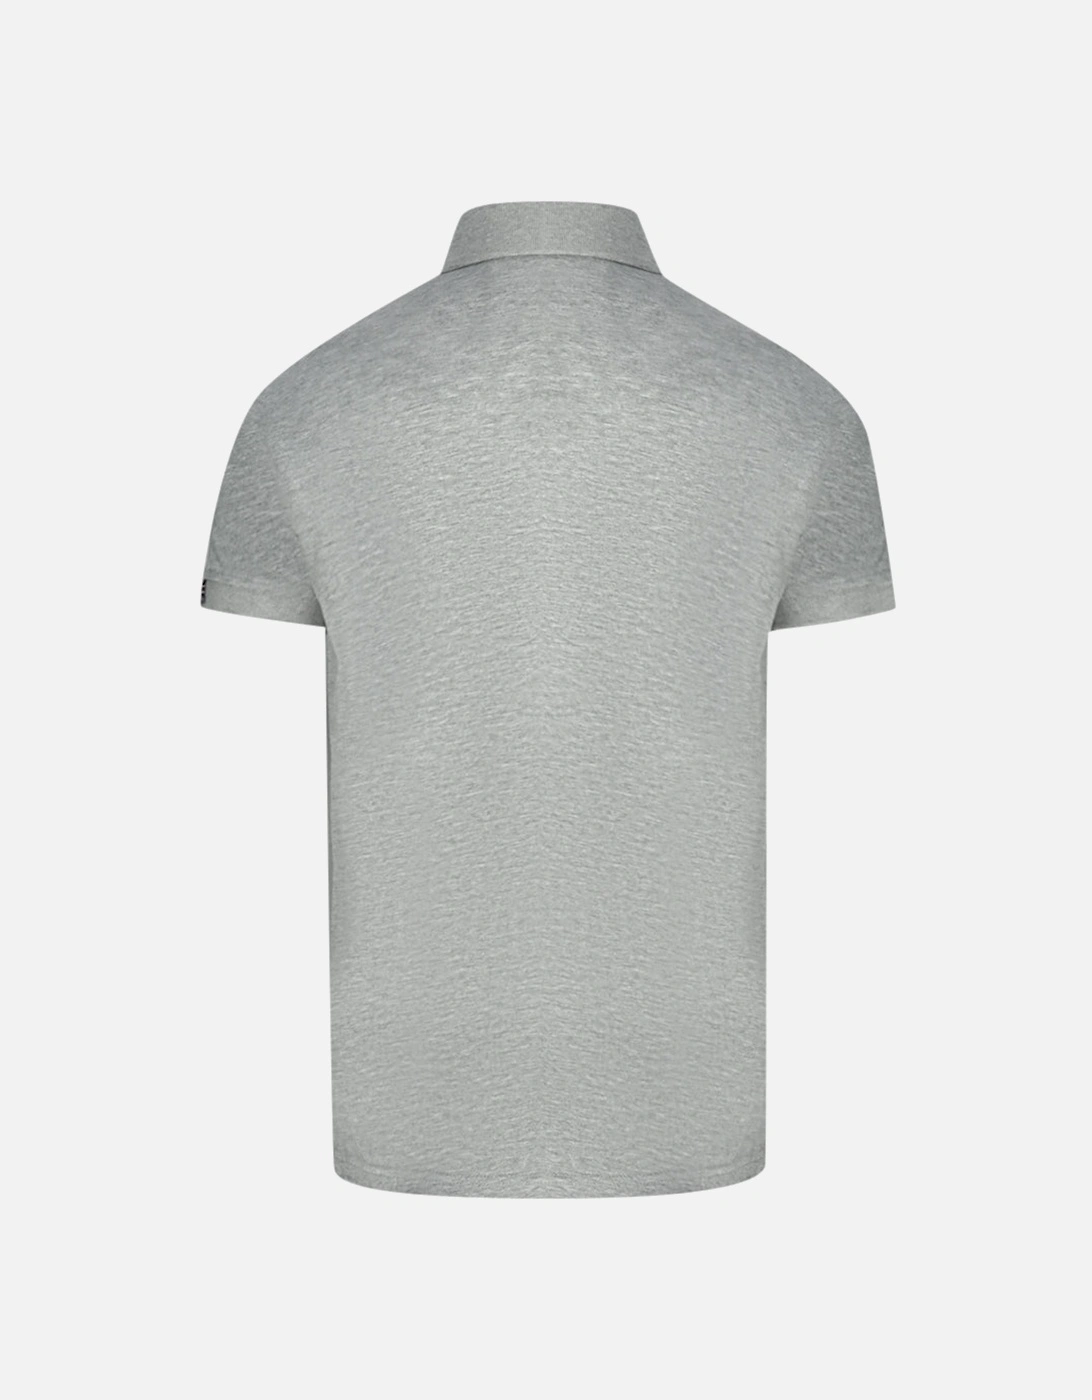 Aldis Grey Polo Shirt